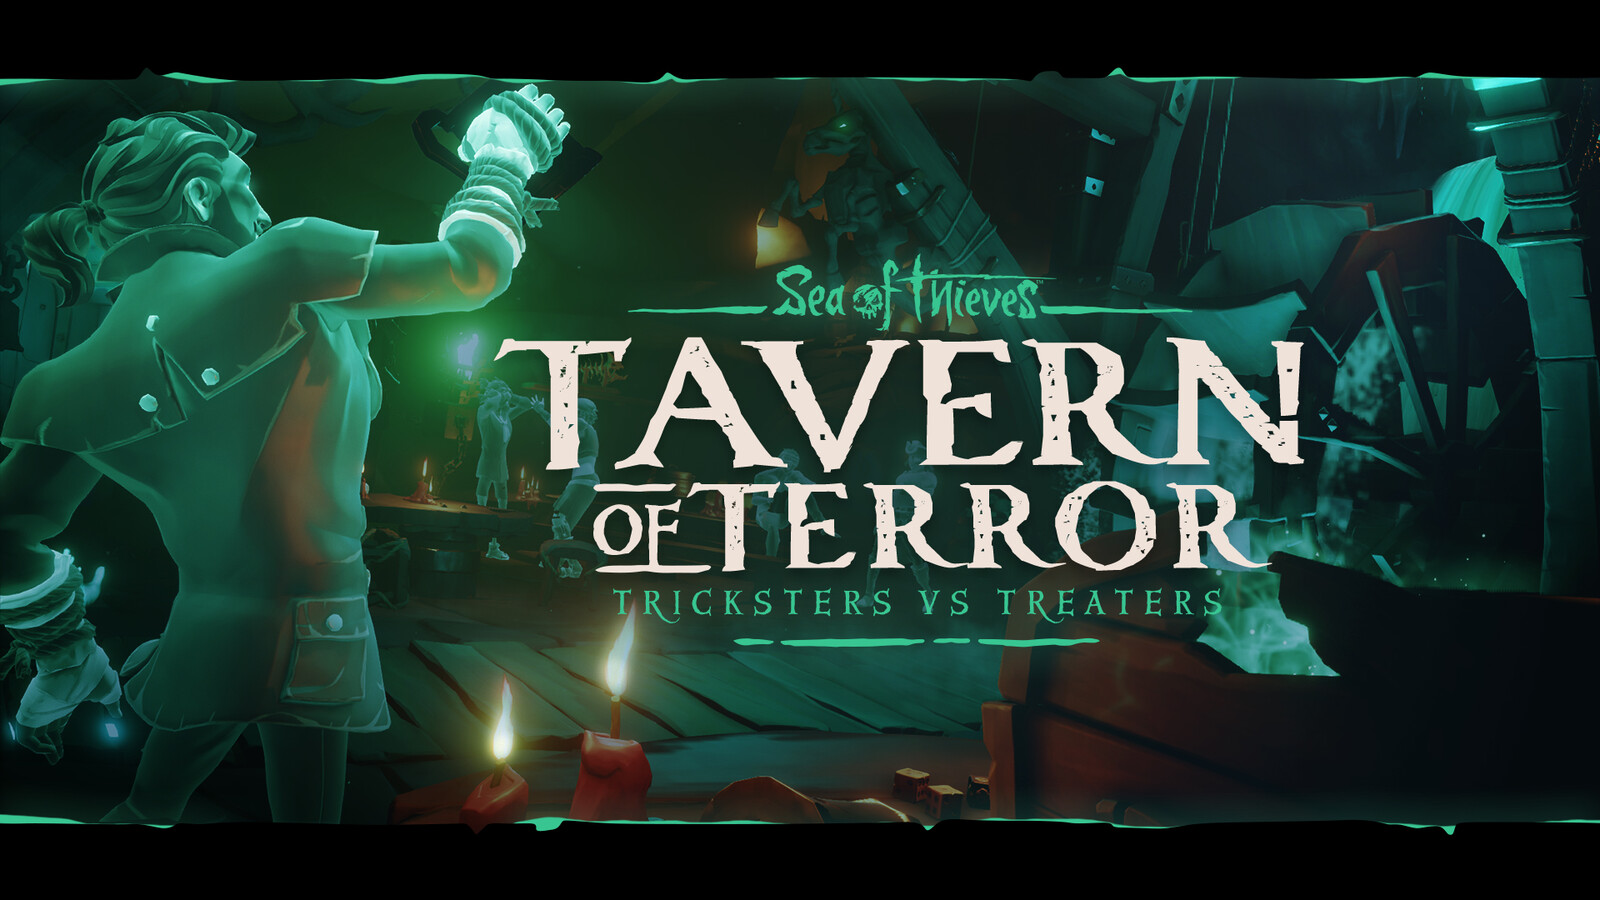 Sea of Thieves - Tavern of Terror Livestream Event